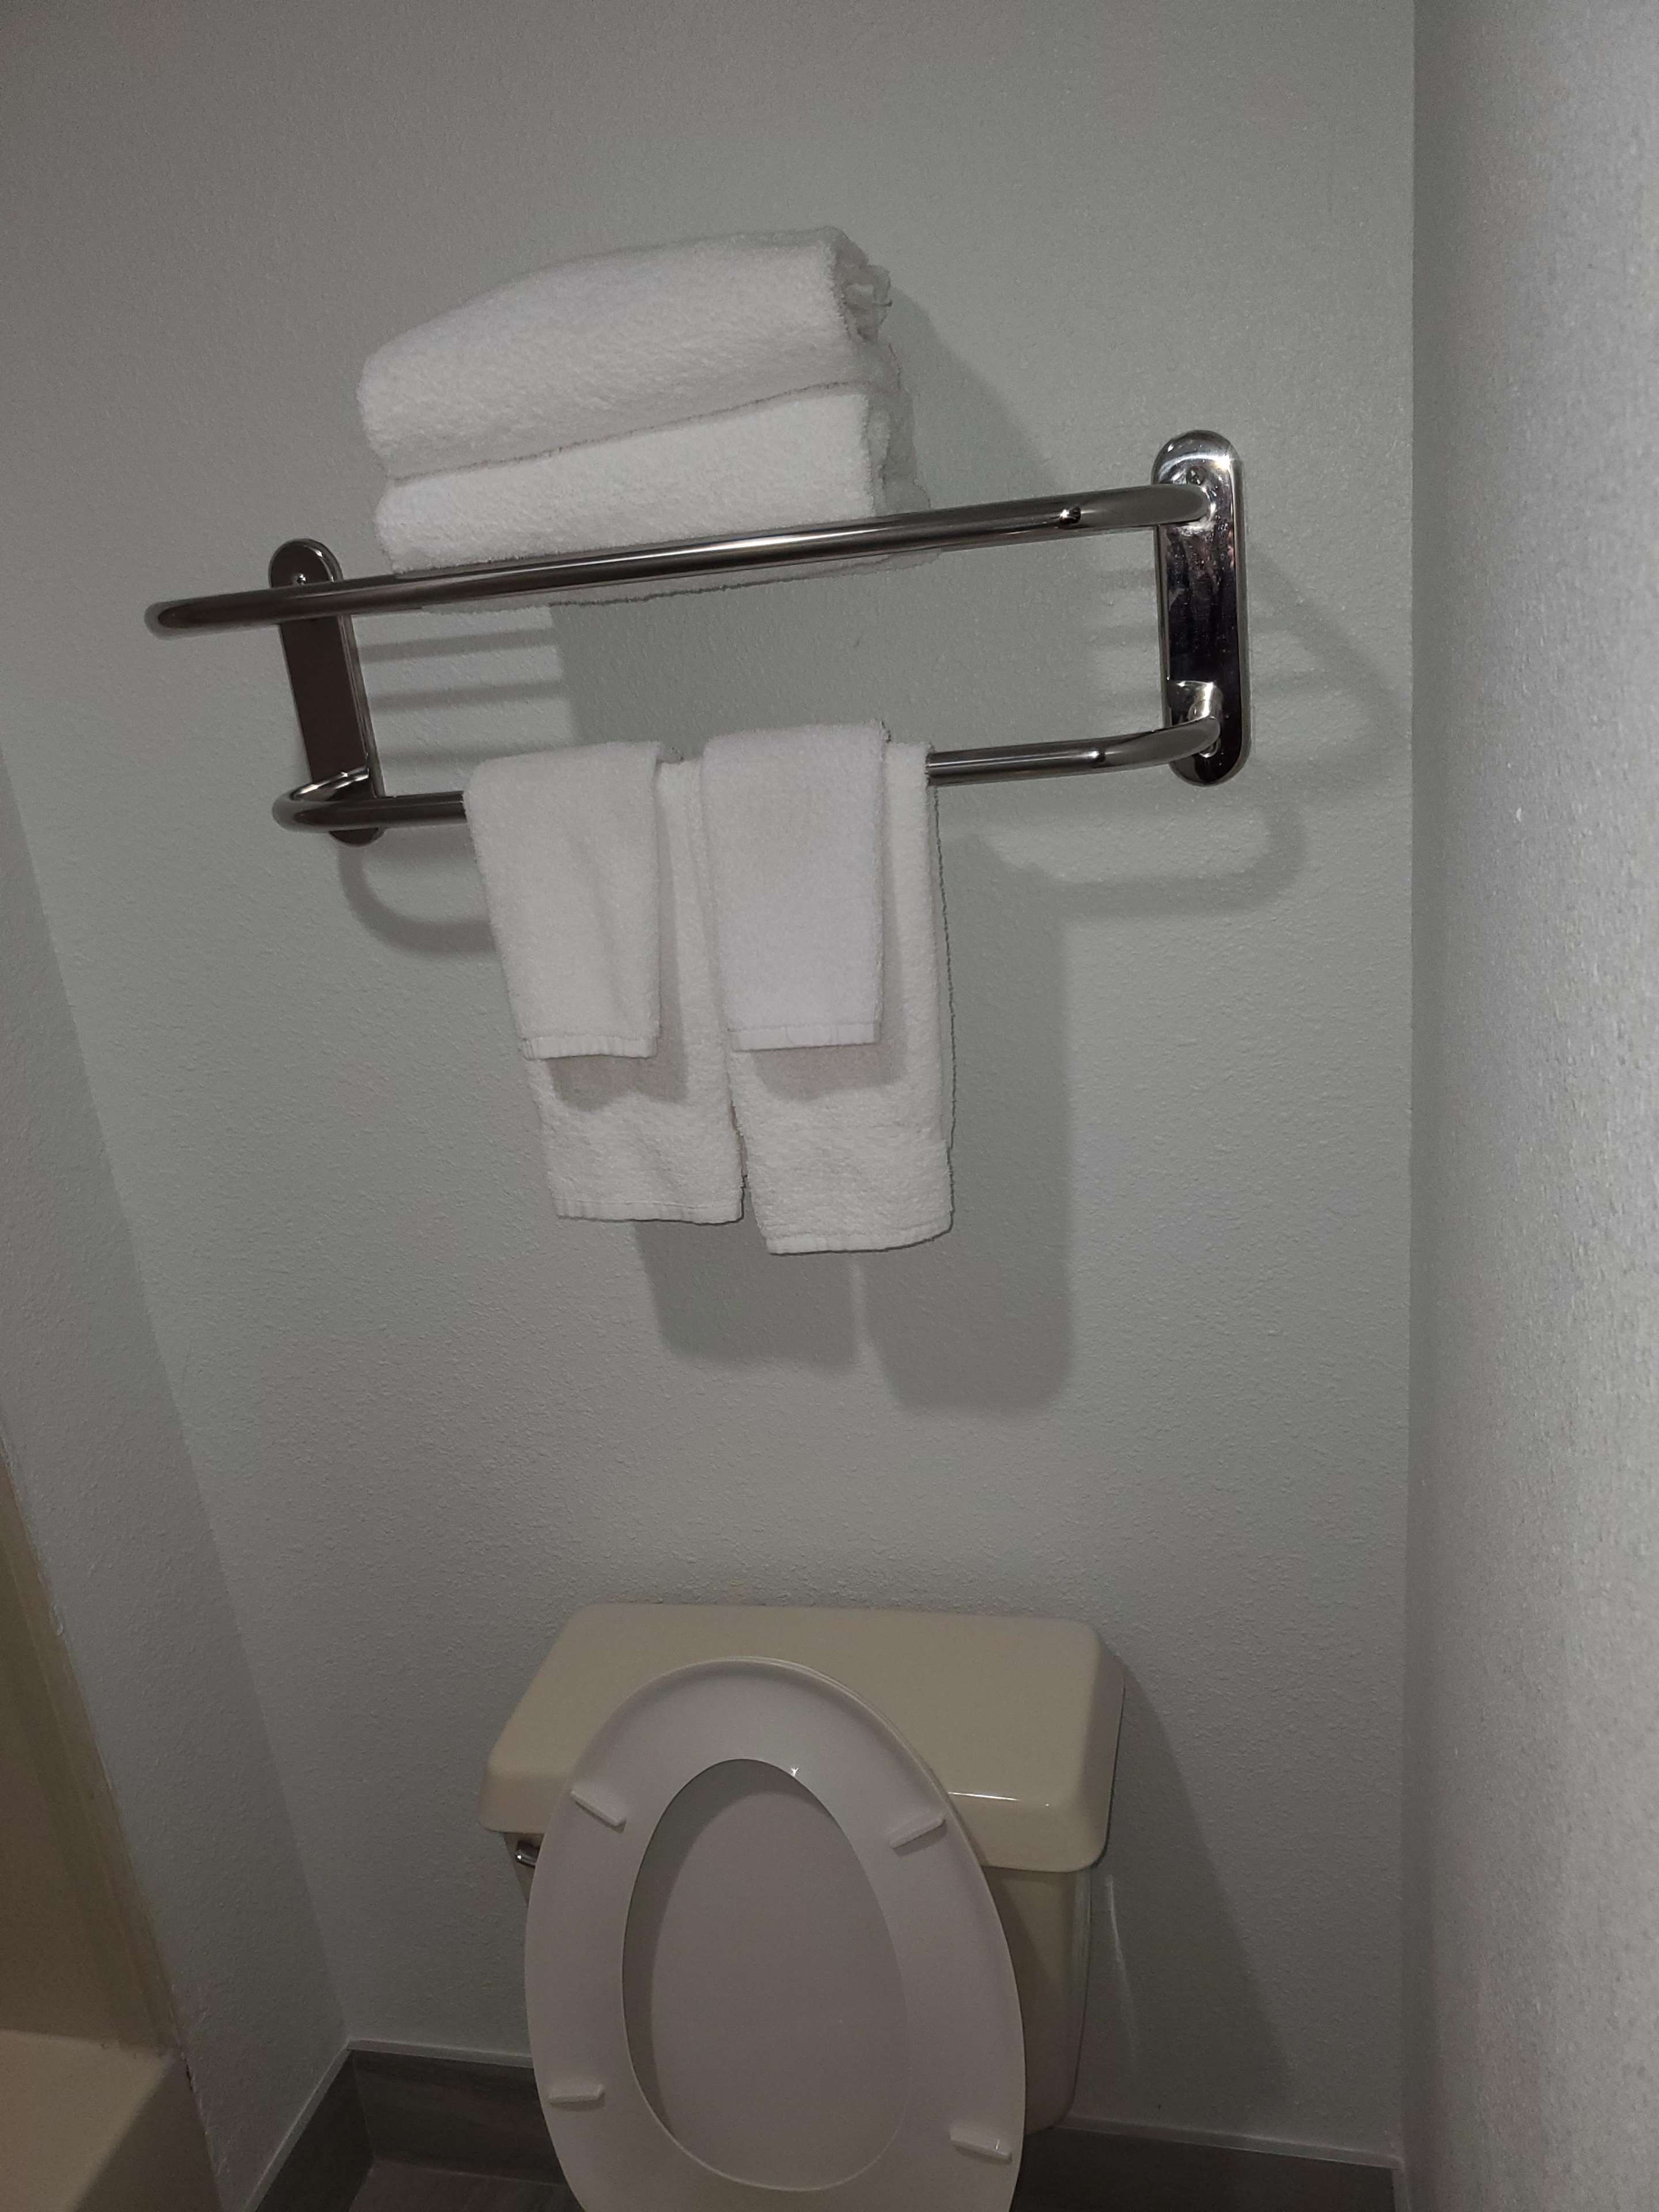 Bathroom Towel Rack